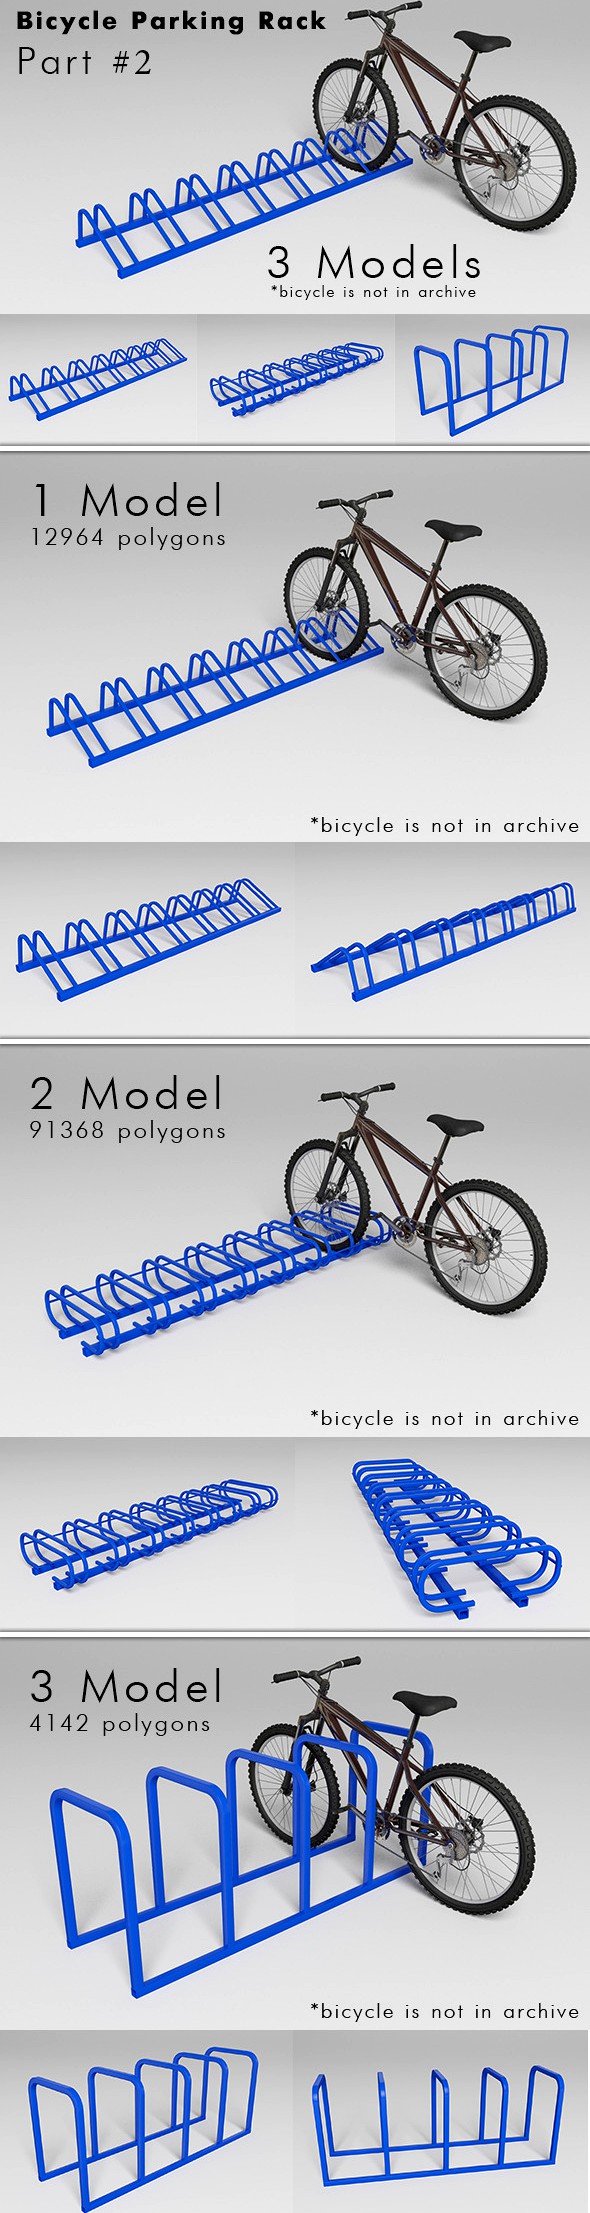 Bicycle Parking Rack - Part #2